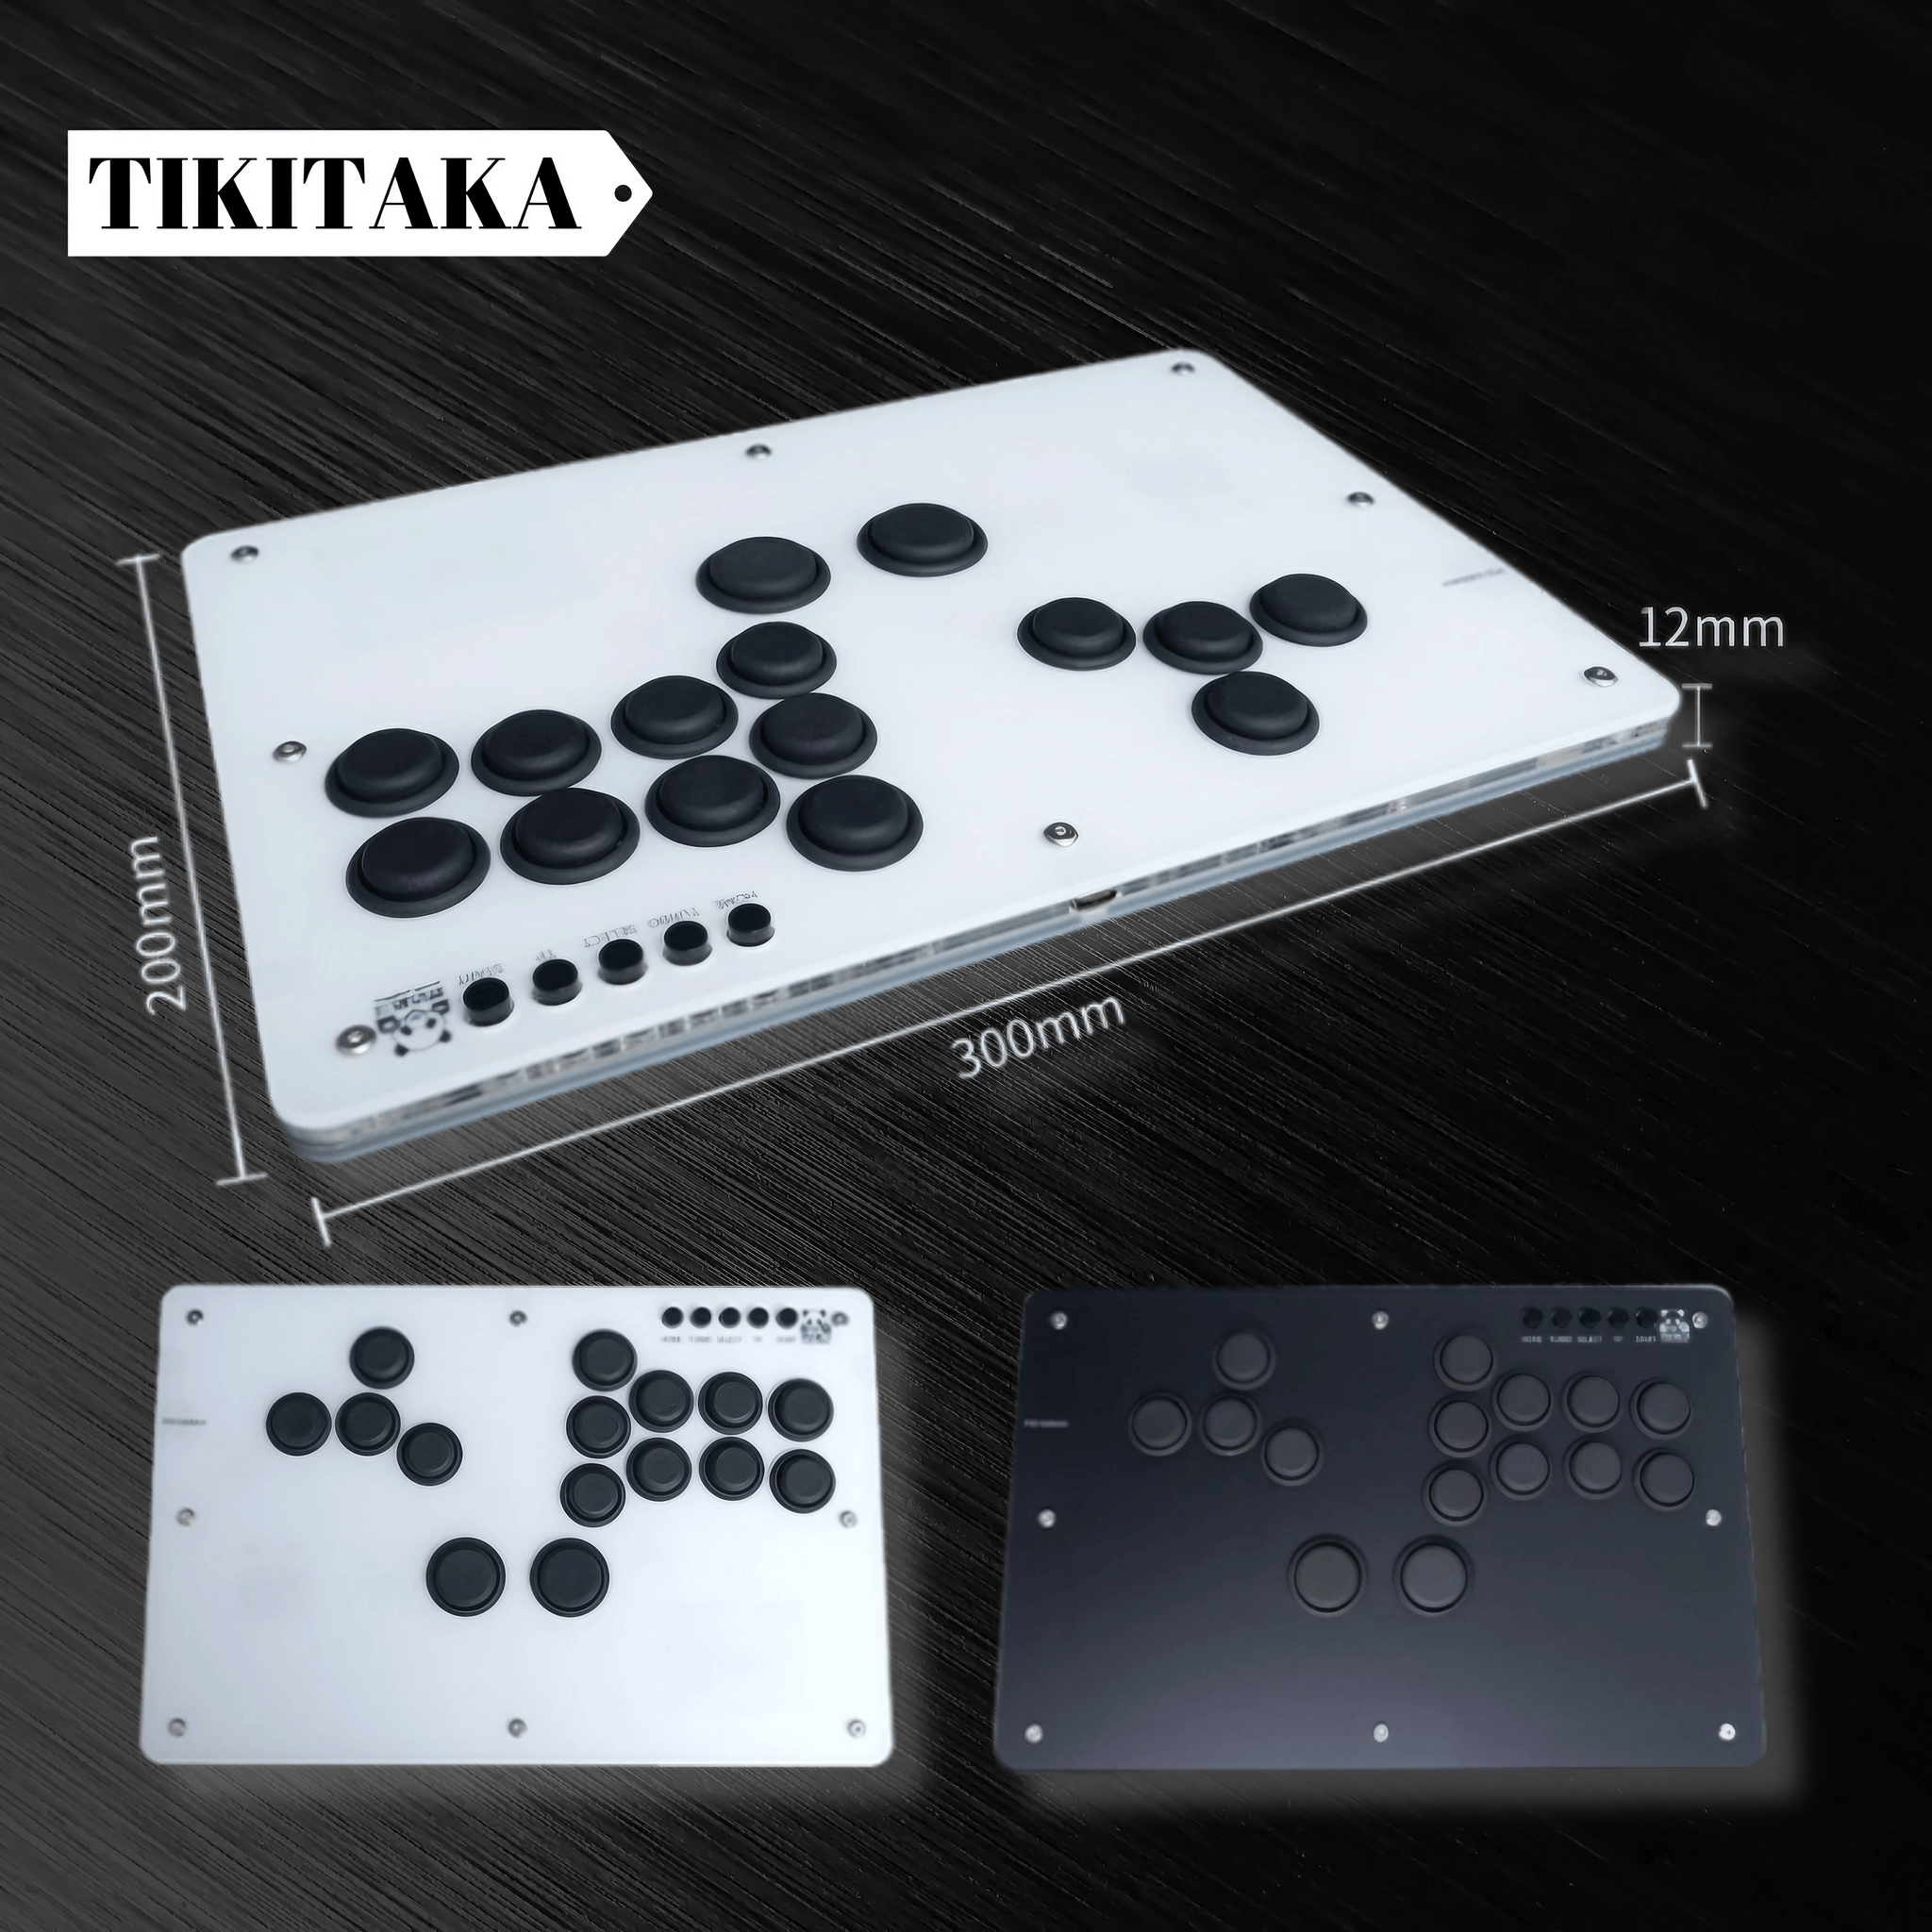 Tikitaka FTG Board ワイド版 - ワイド版ホワイト